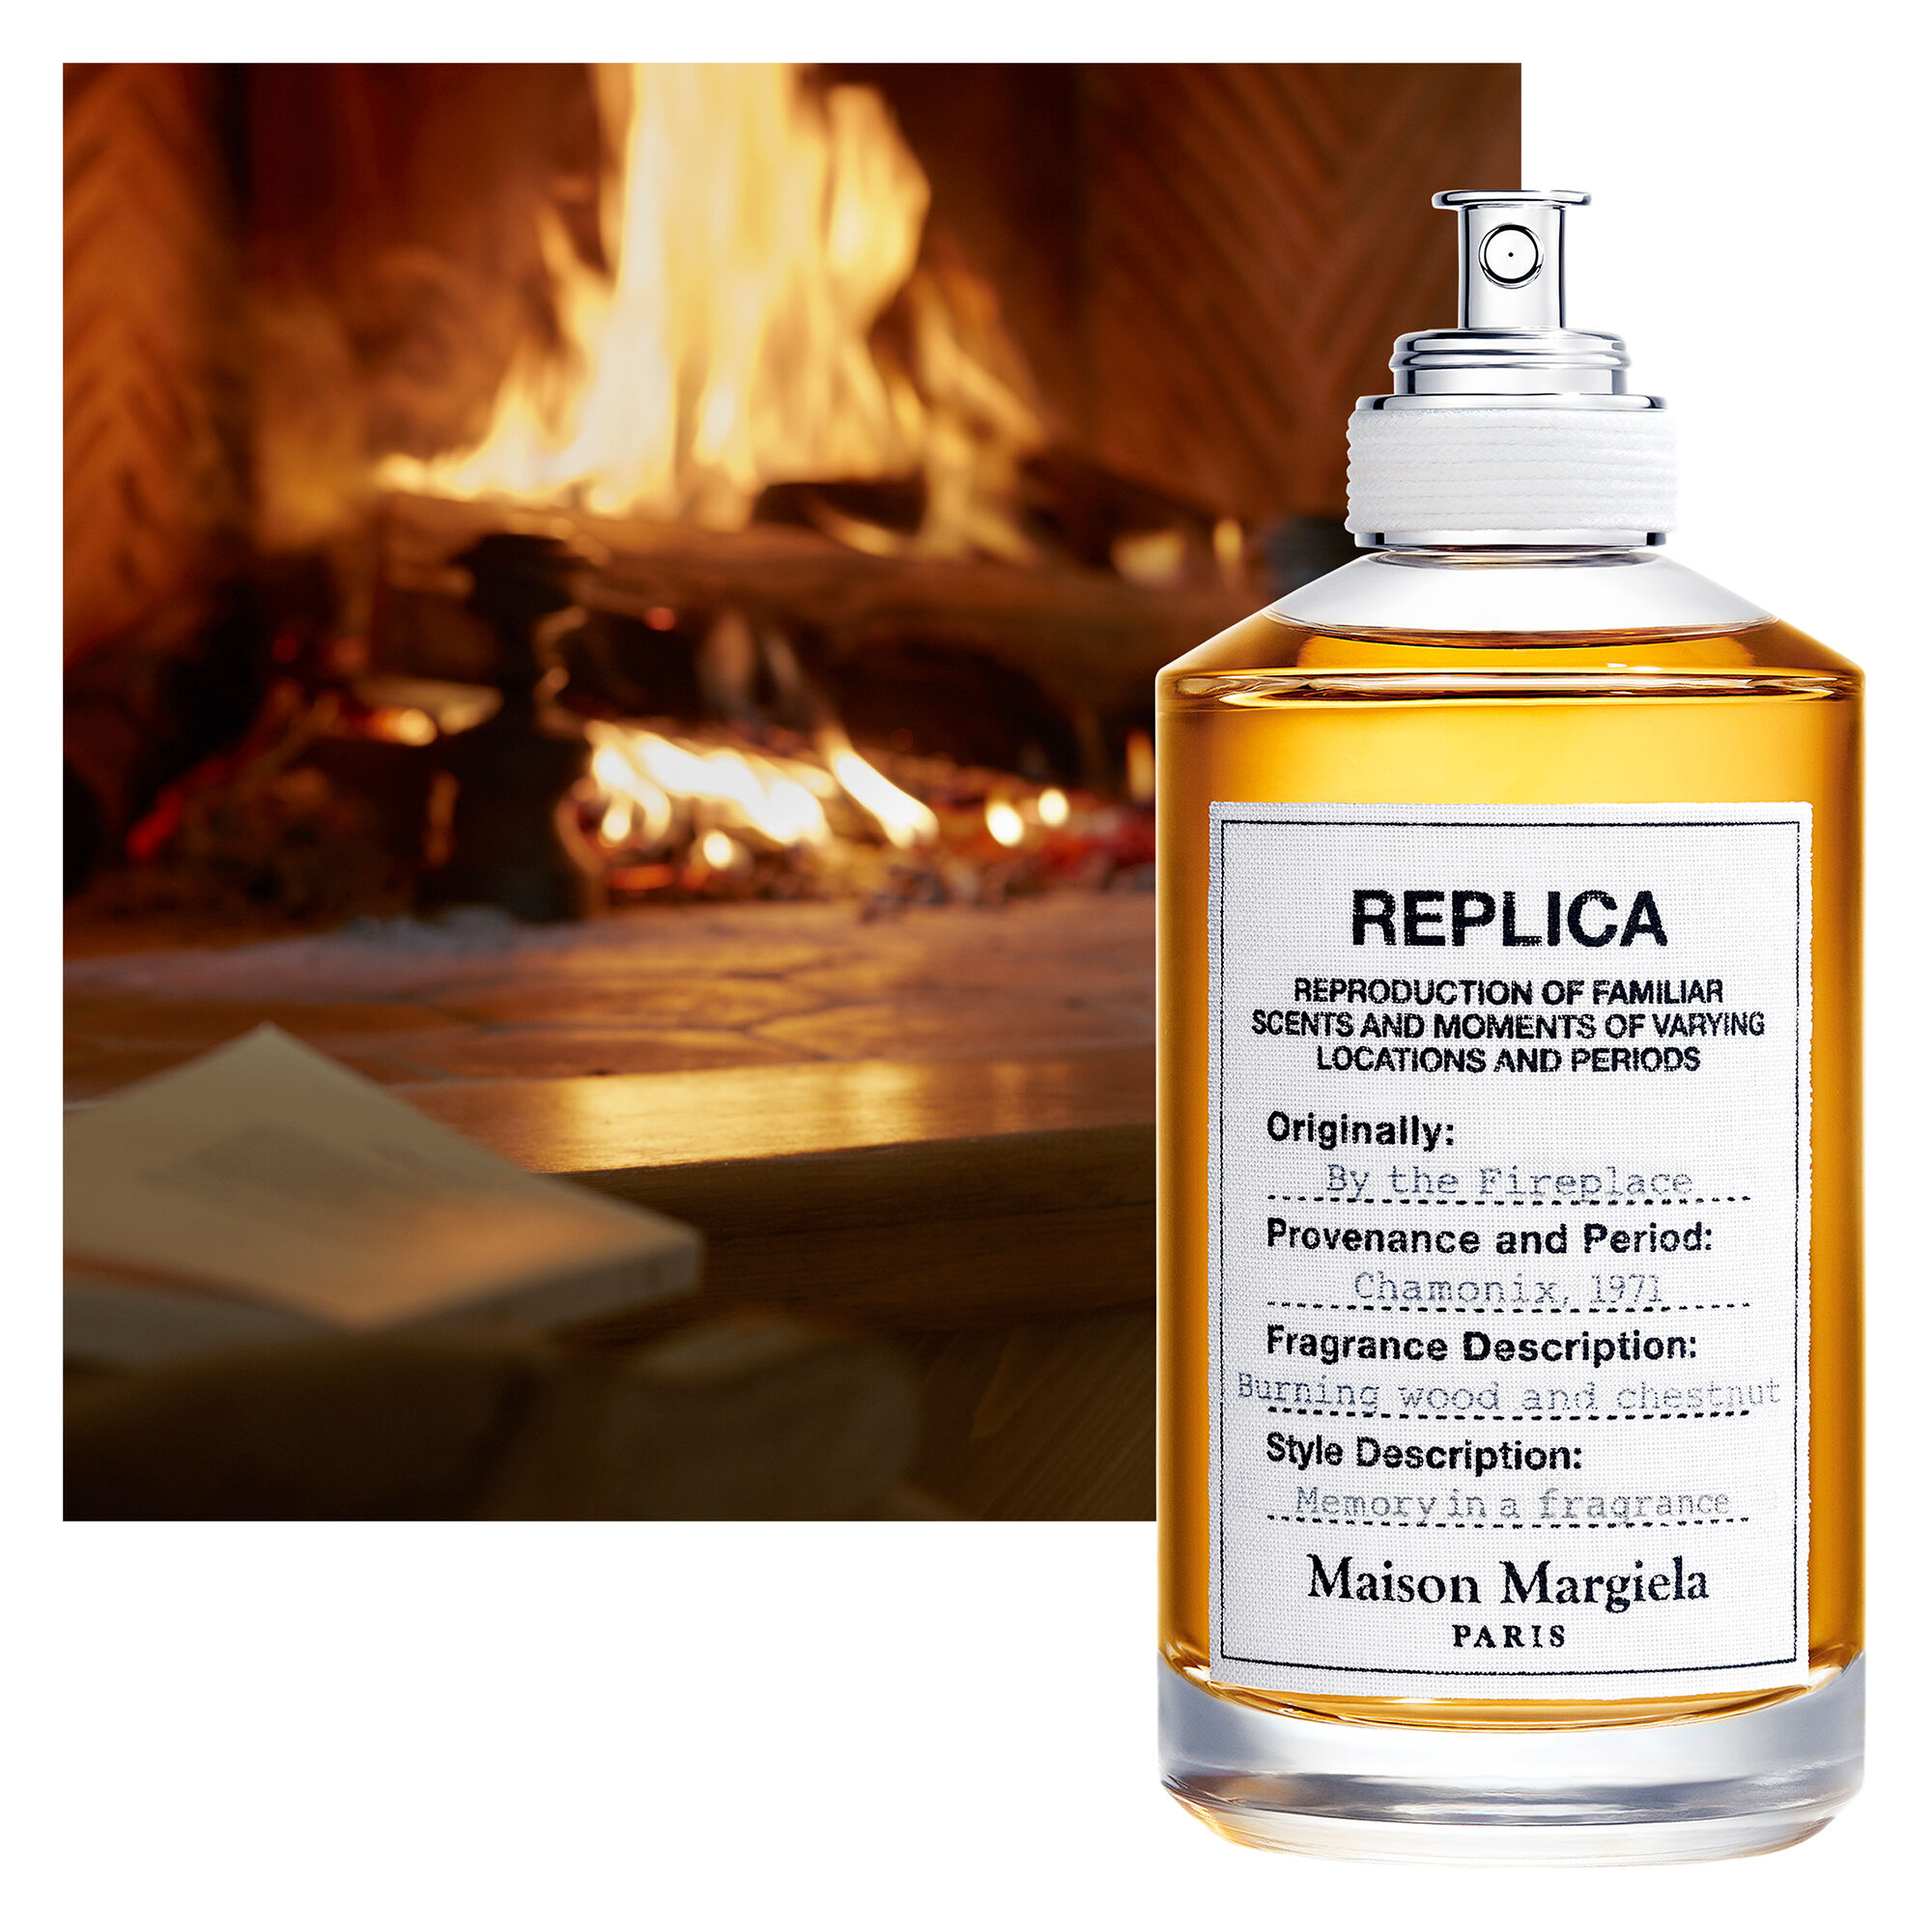 REPLICA By the Fireplace, Eau de Toilette by Maison Margiela